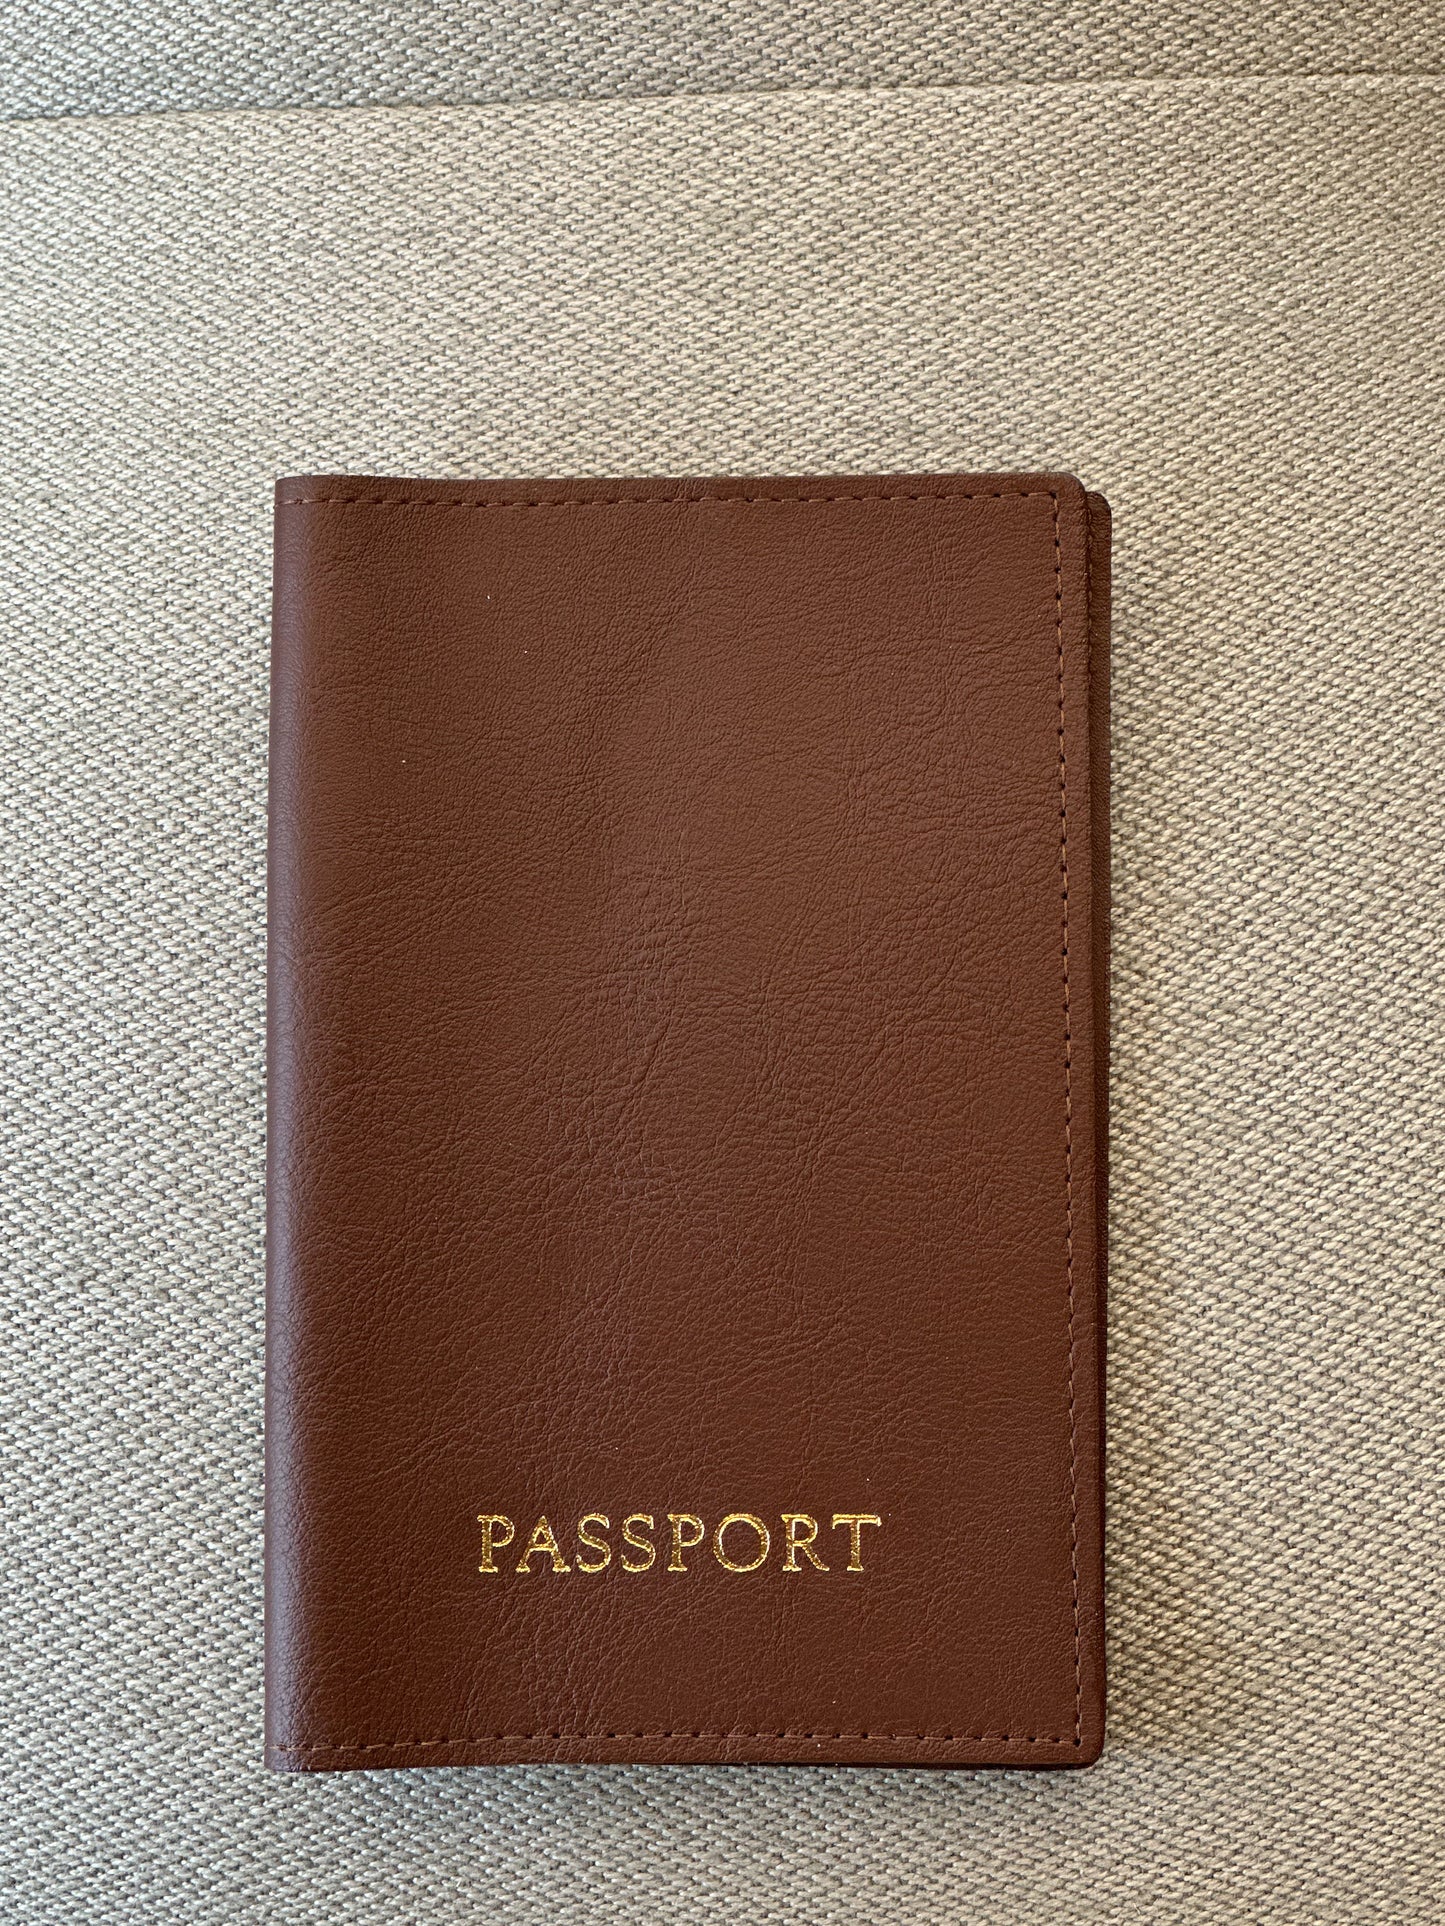 Atlas Passport Cover Brown